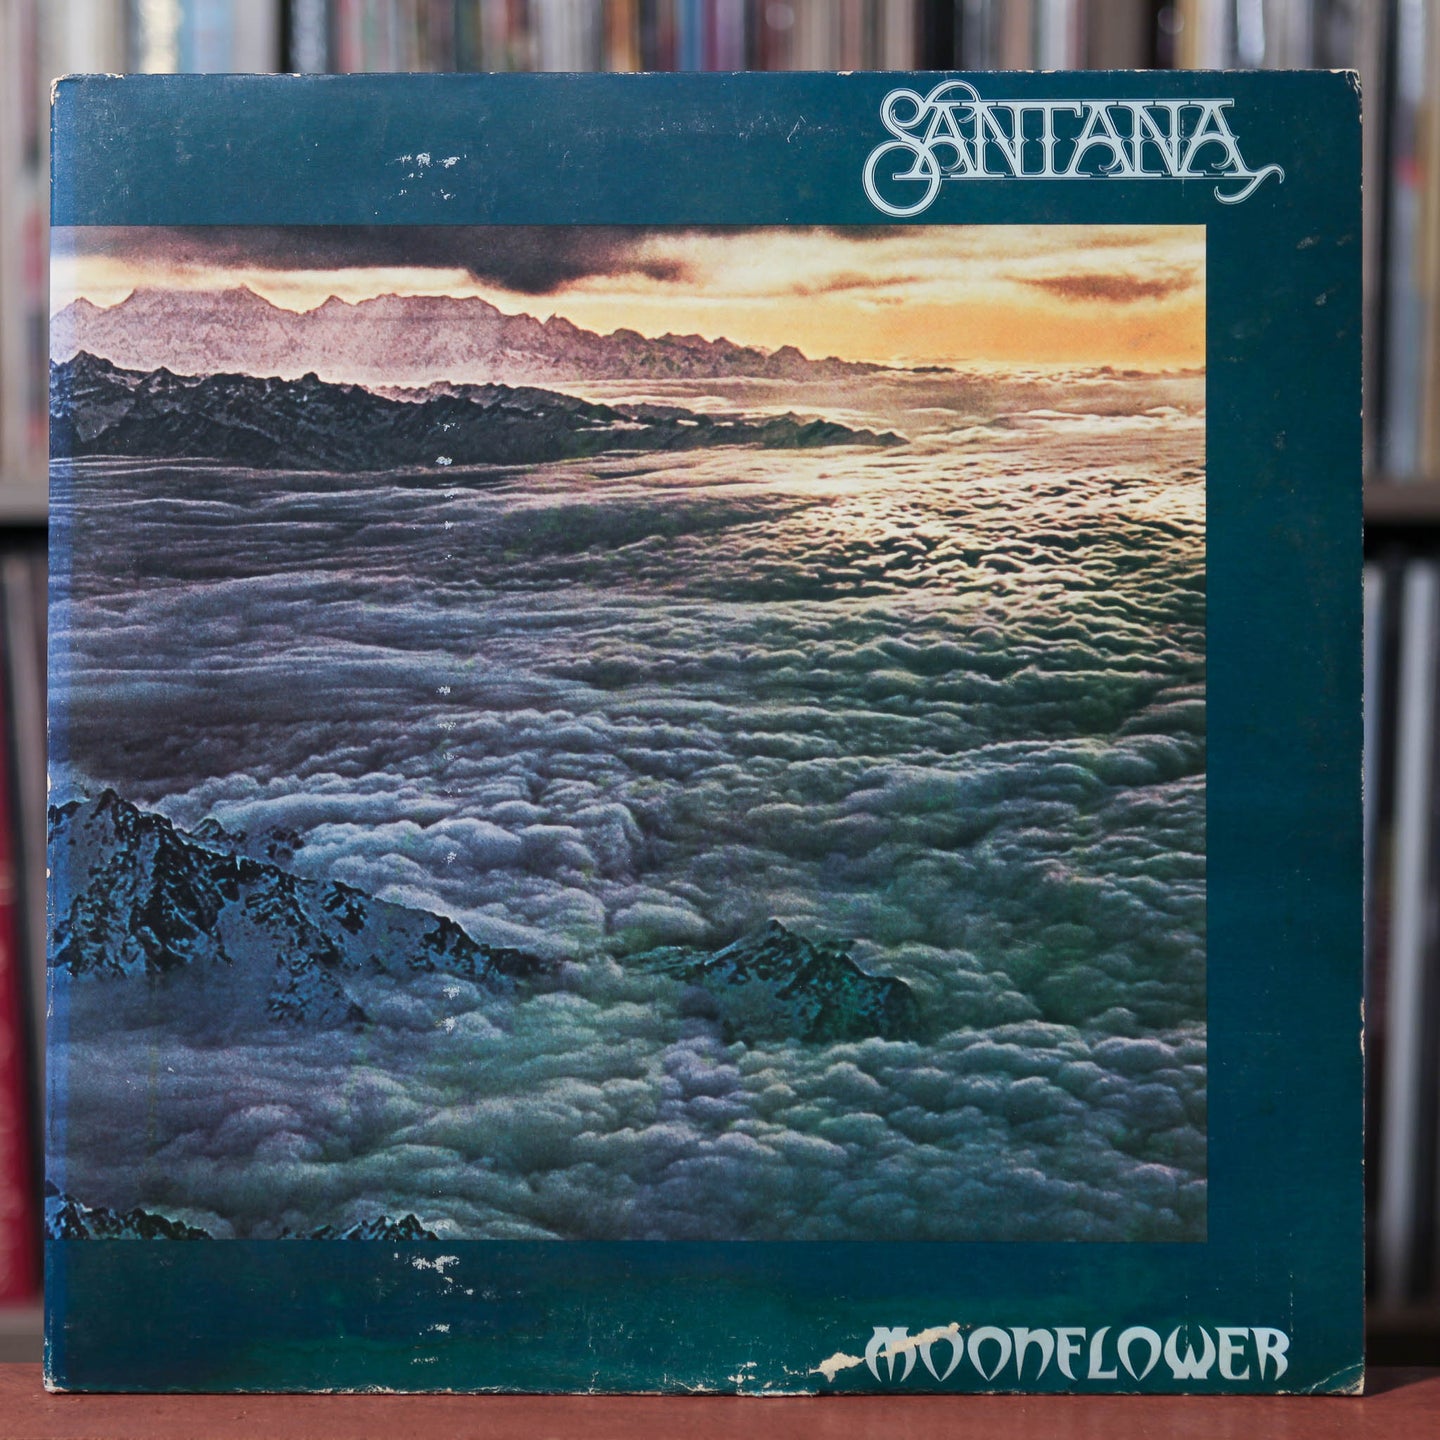 Santana - Moonflower - 2LP - 1977 Columbia, VG/VG